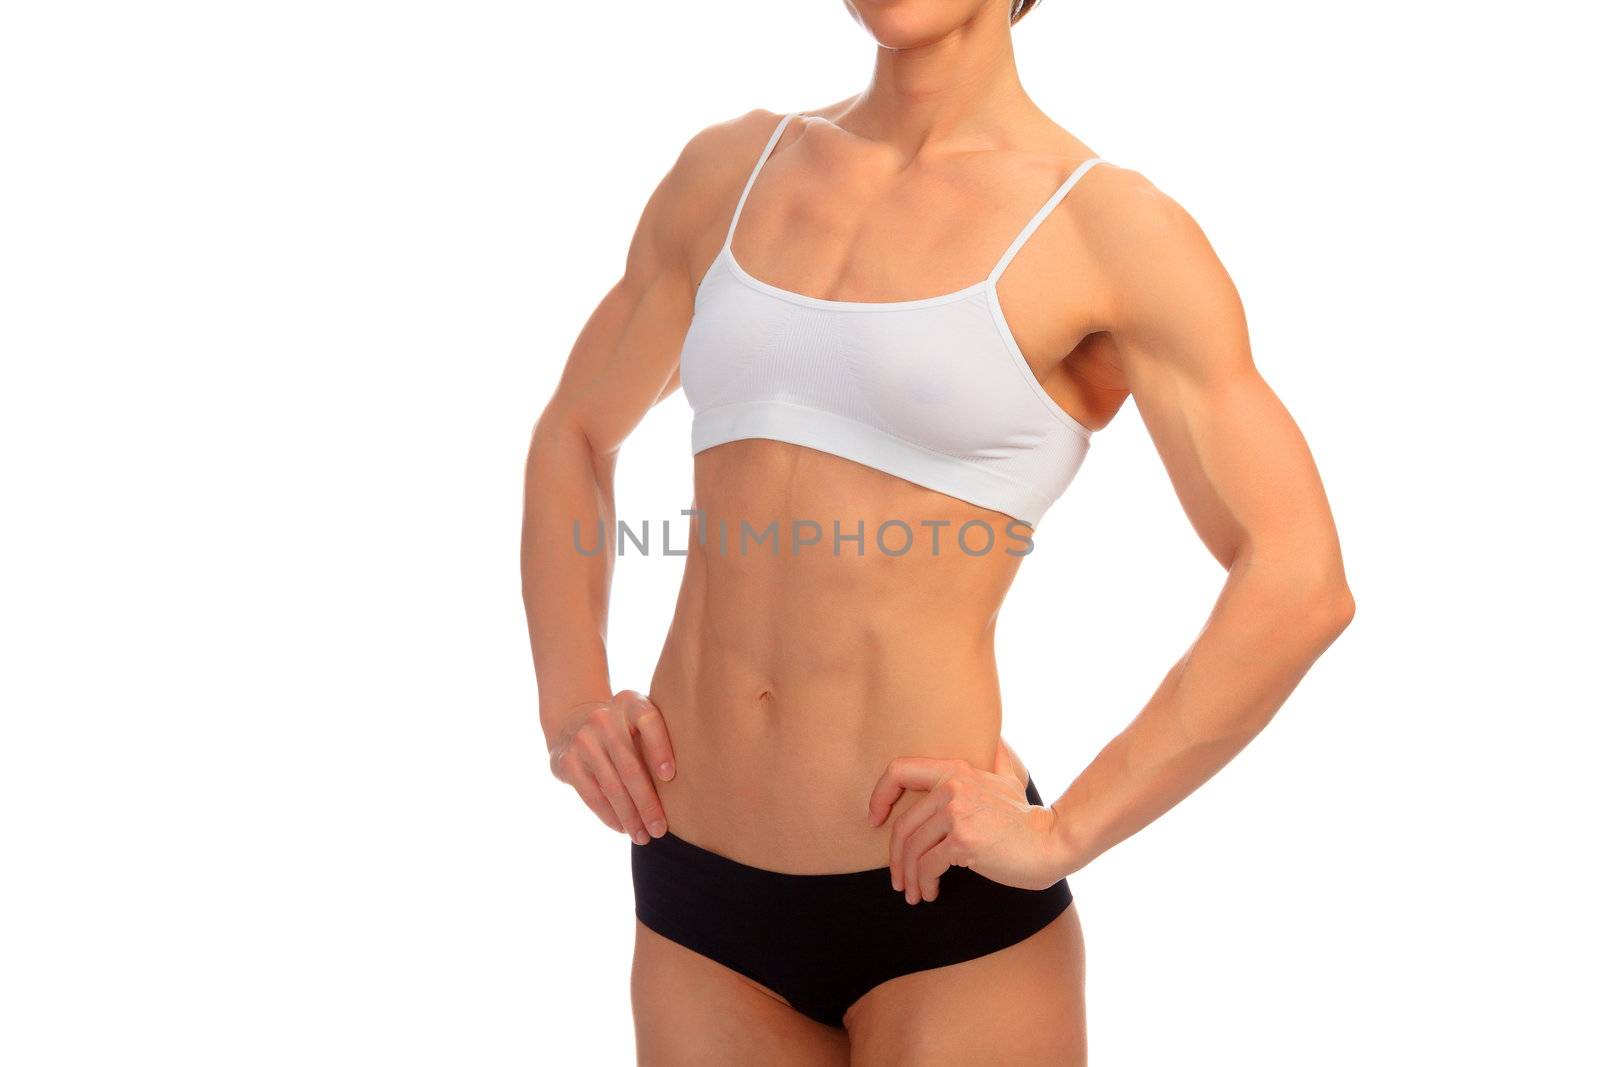 Tanned female bodybuilder by Nobilior